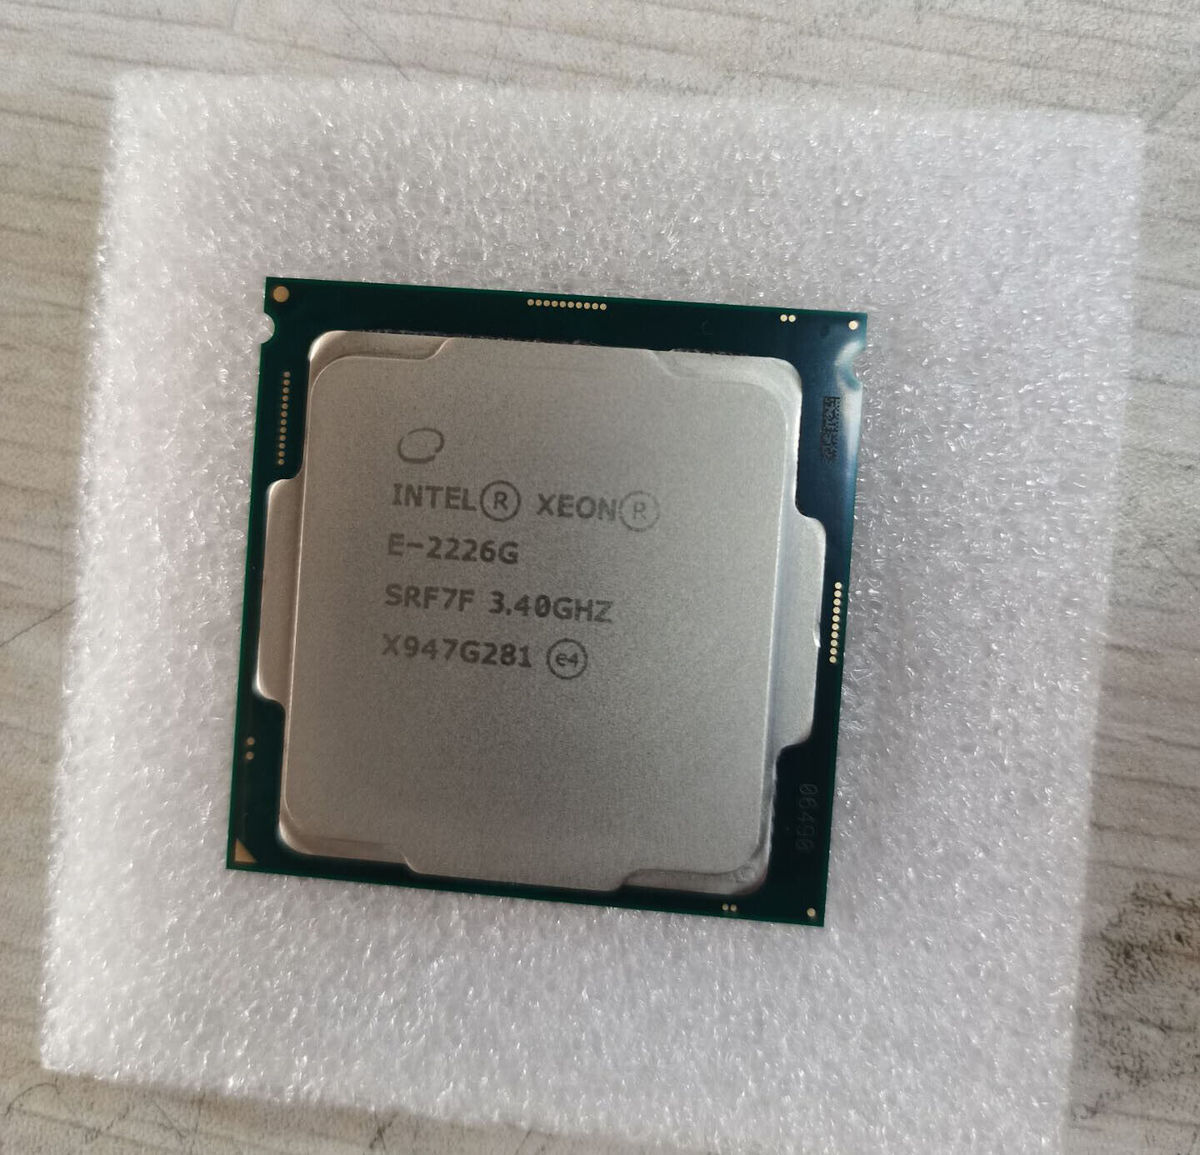 Intel Xeon E-2226G LGA-1151 Server CPU Processor 3.40 - 4.70 GHz 6-Core 12MB 80W